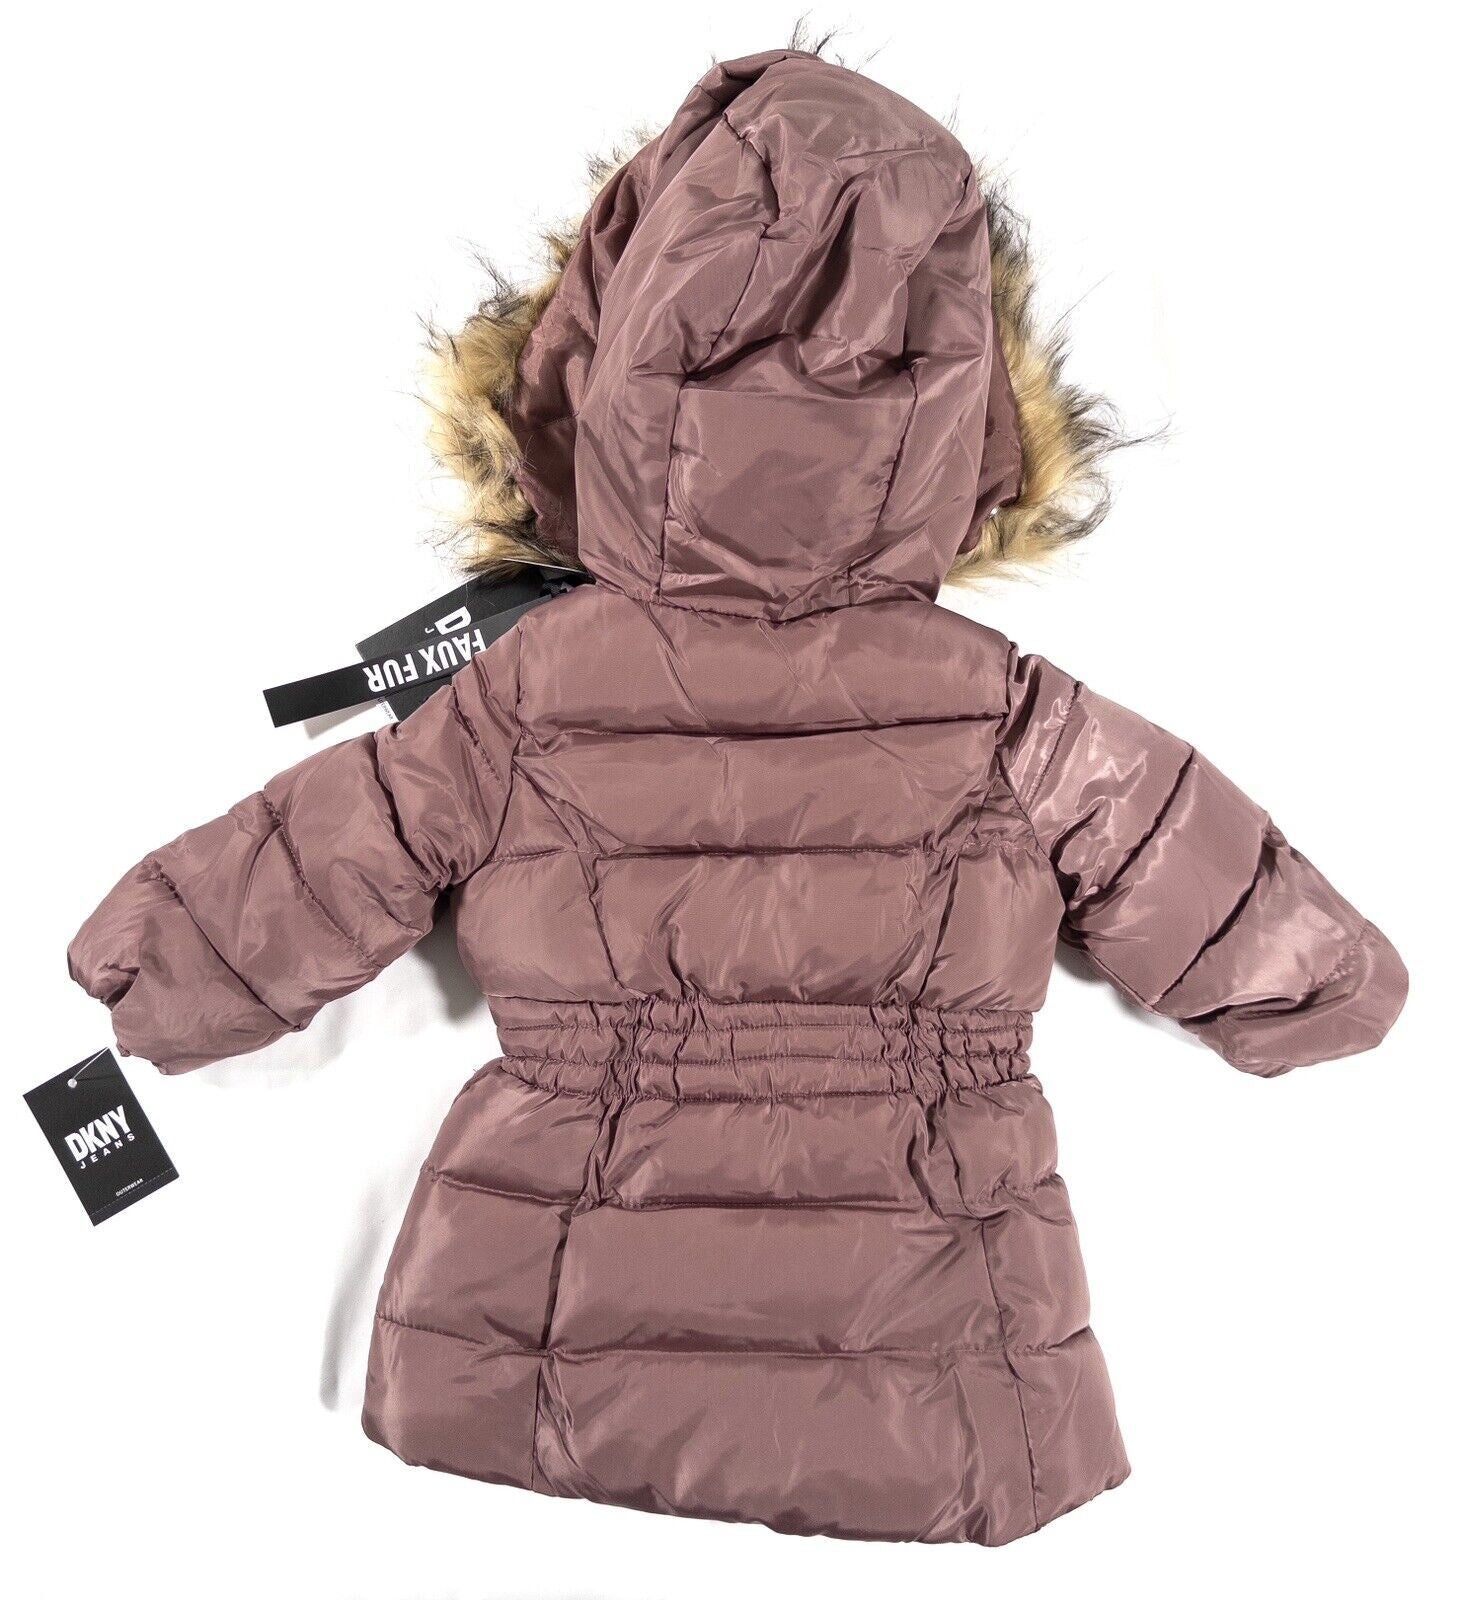 DKNY JEANS Baby Girls Coat Purple Hooded Size UK 12 Months